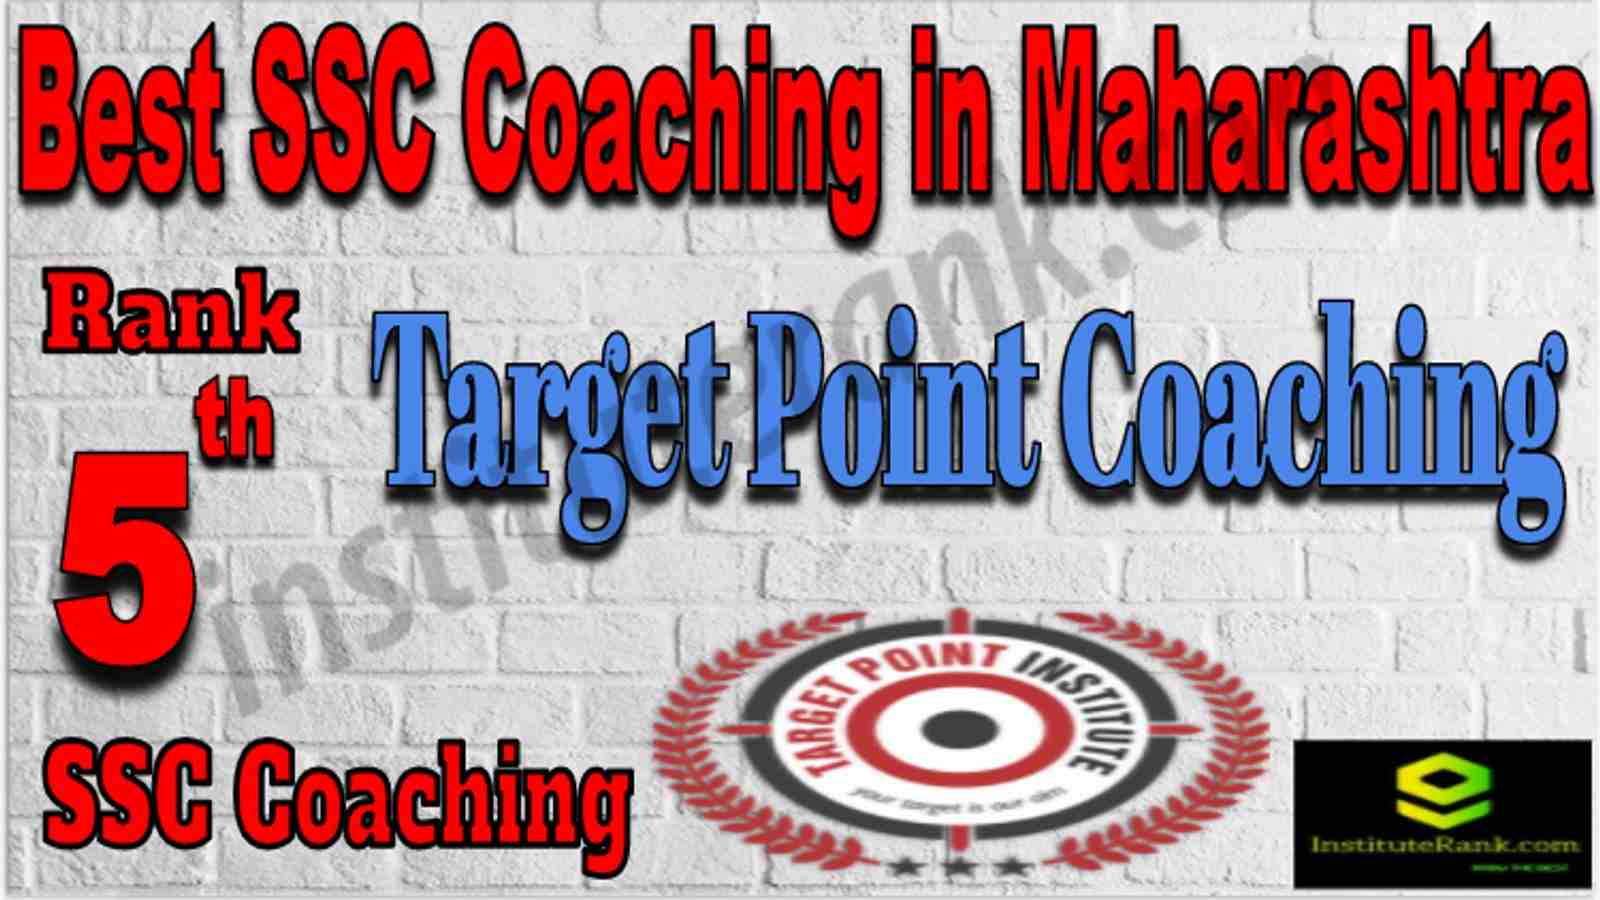 Rank 5 Best SSC Coaching in Maharashtra